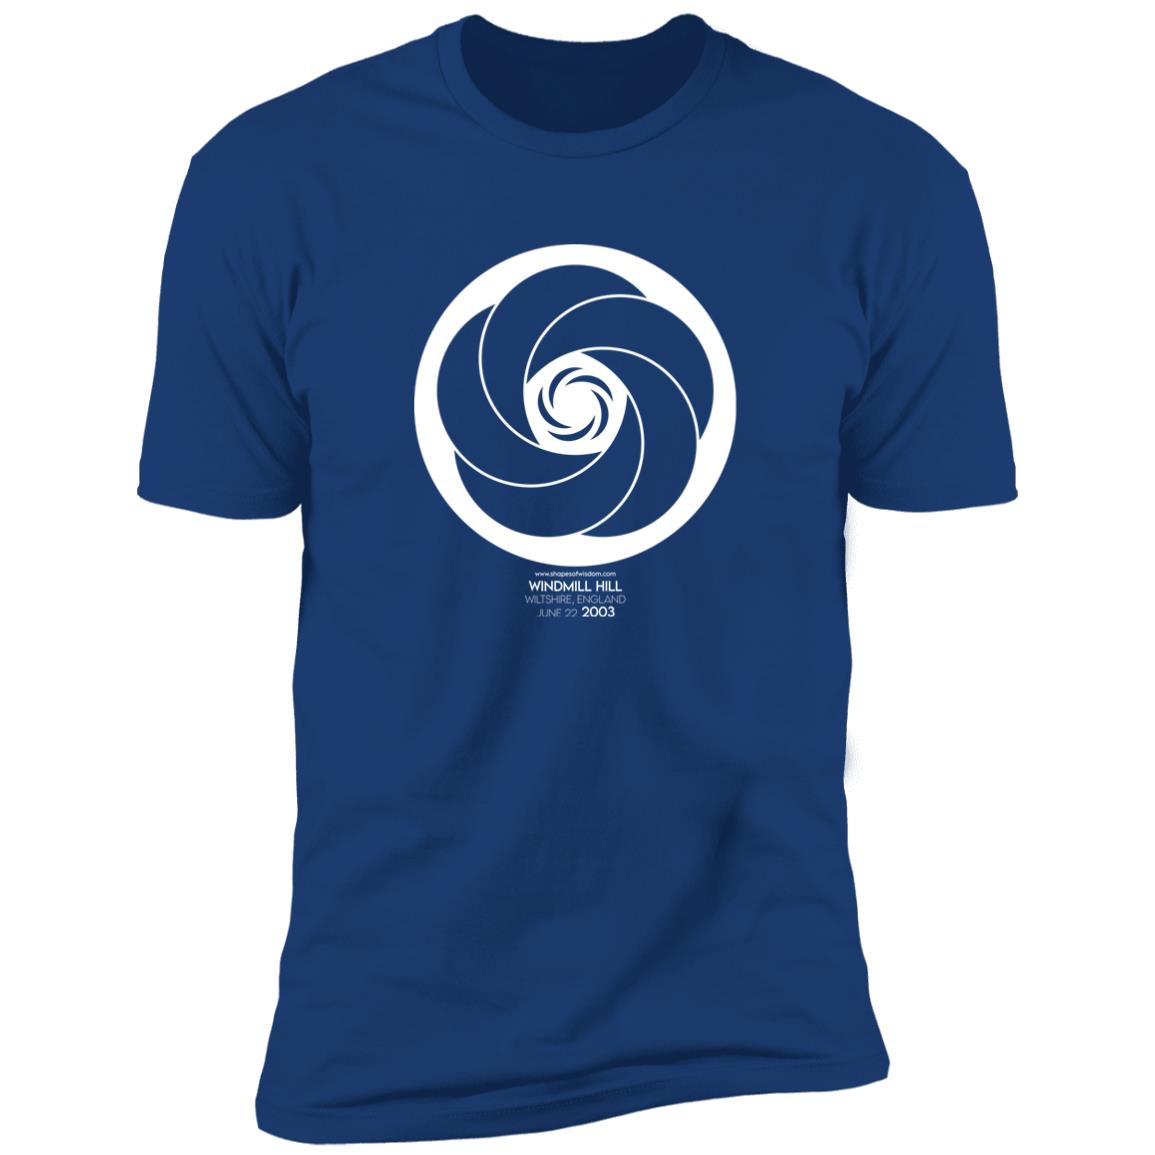 Crop Circle Premium T-Shirt - Windmill Hill 9